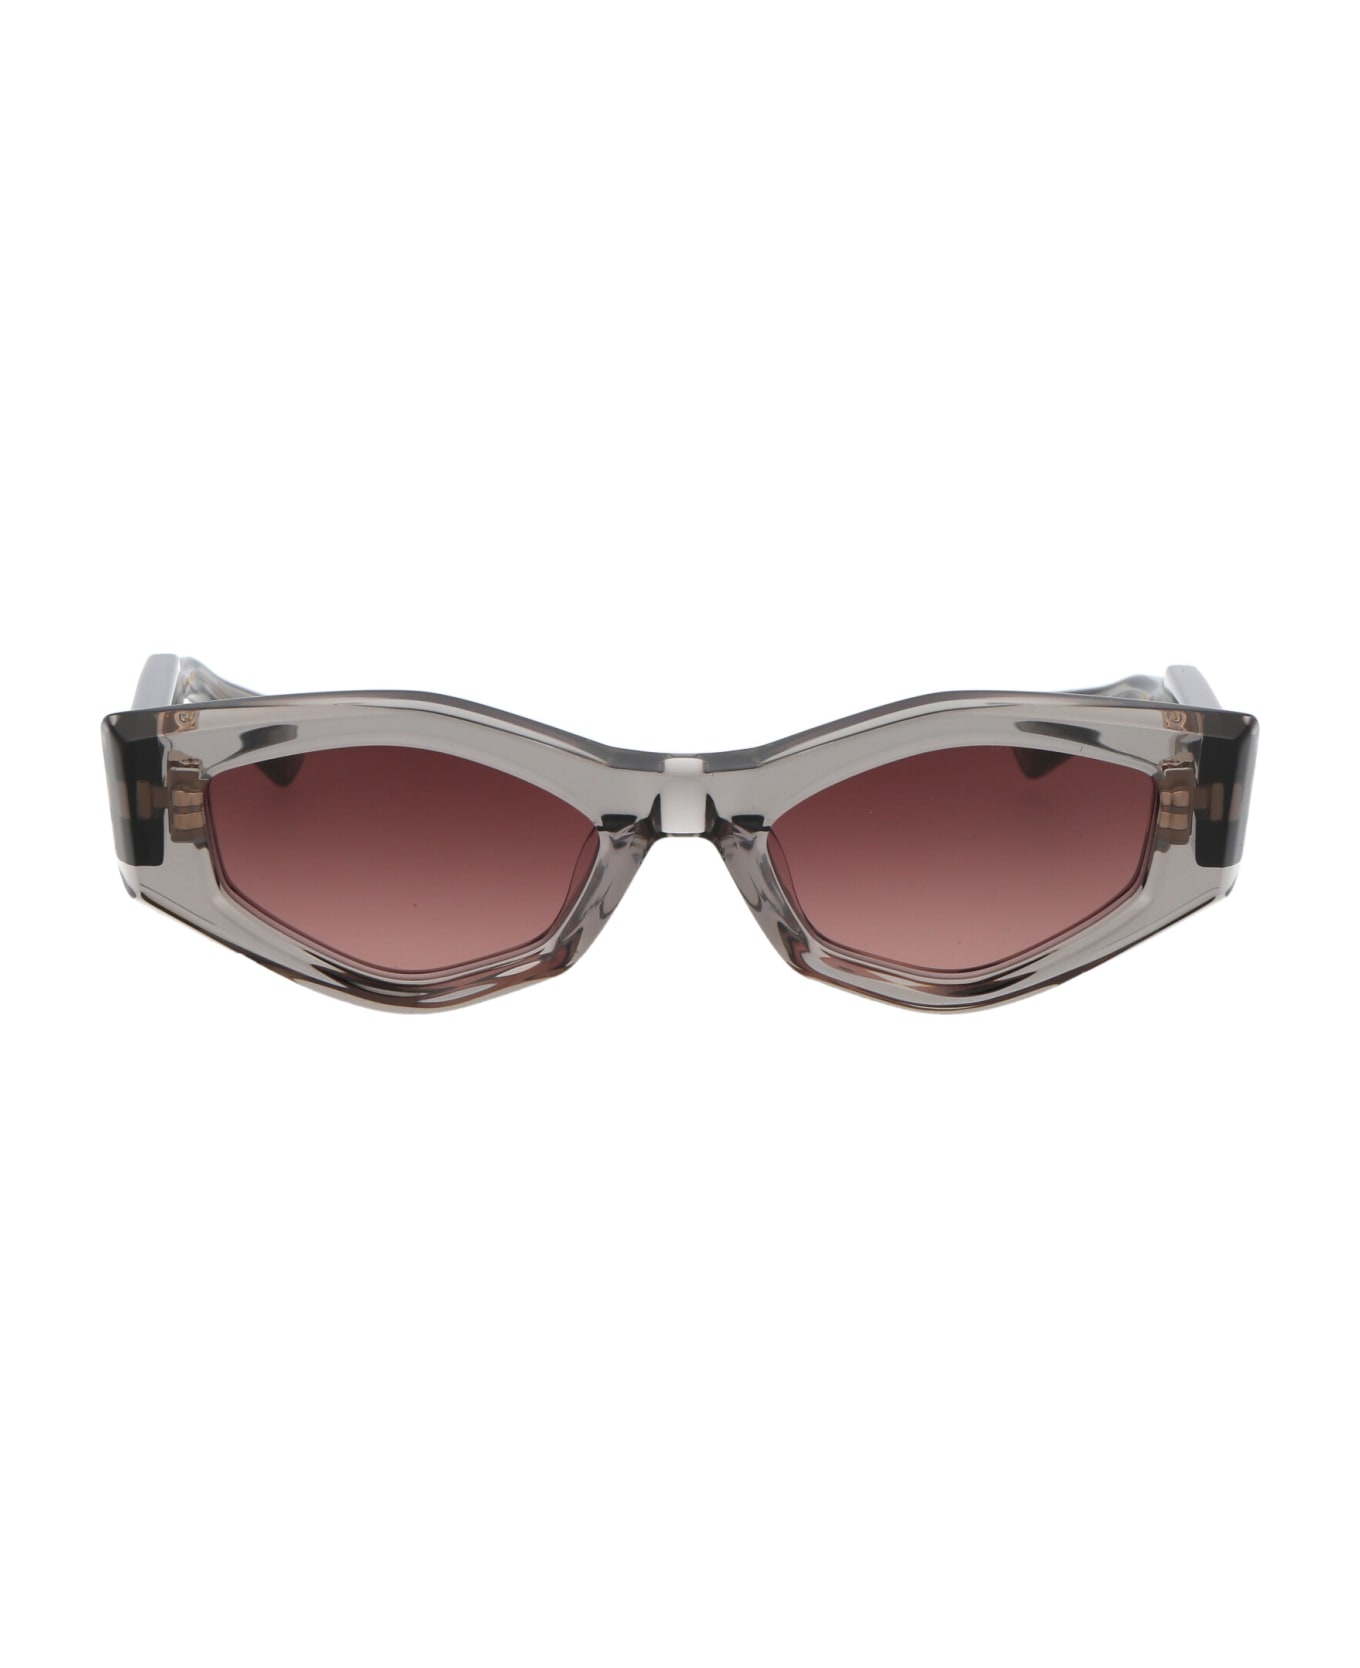 Valentino Eyewear V - Tre Sunglasses - 101Sinner Sunglasses Cord